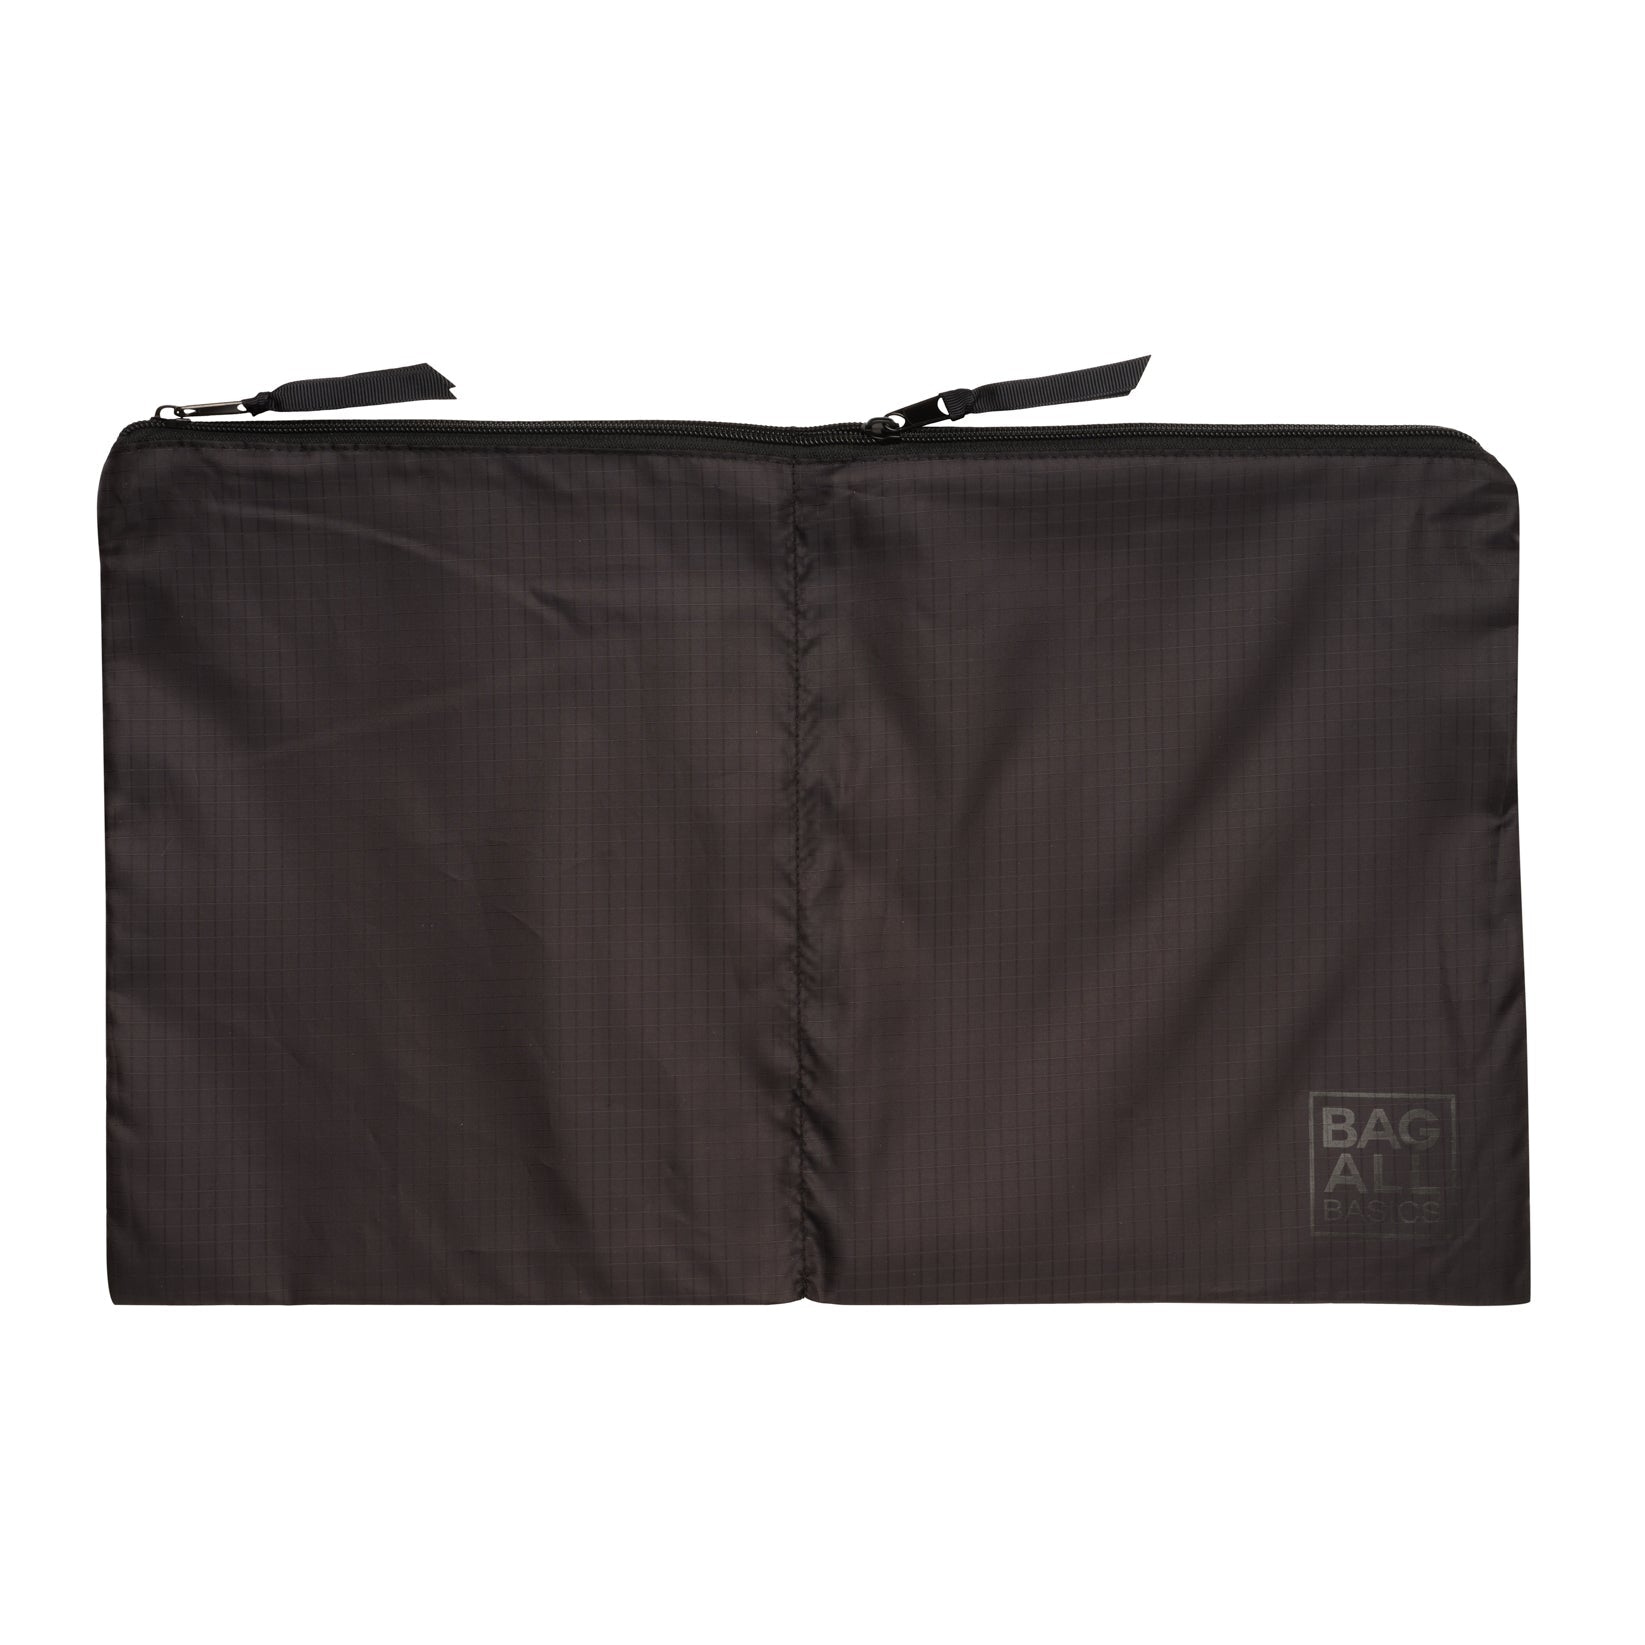 Bag-all Basic Packing Bags Set, 5-pack, Black - Bag-all